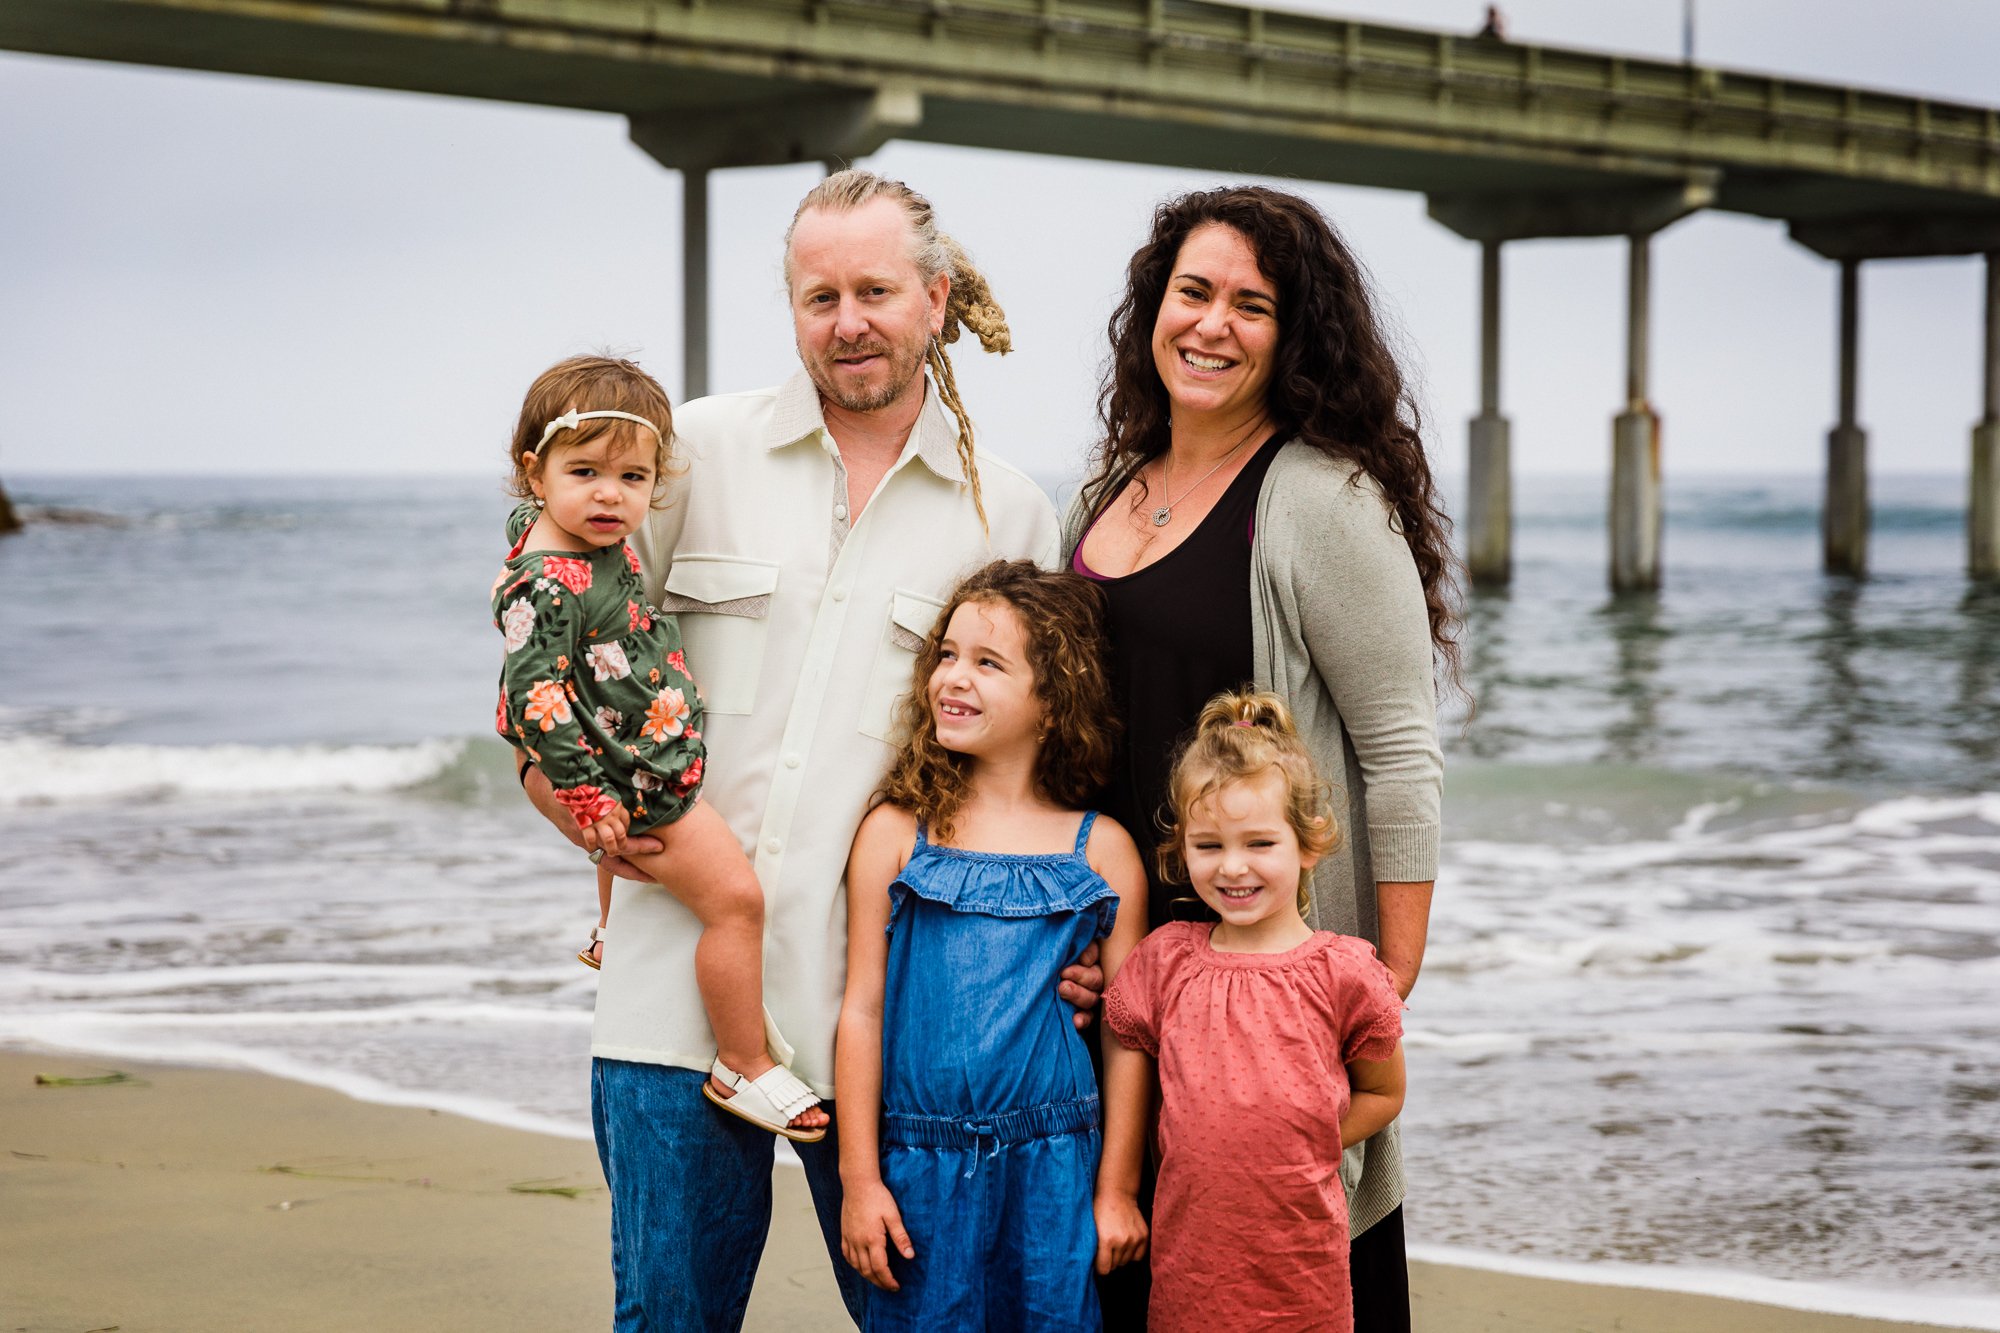 Family Portrait Photography Session at Ocean Beach Pier, San Diego, California-68.jpg